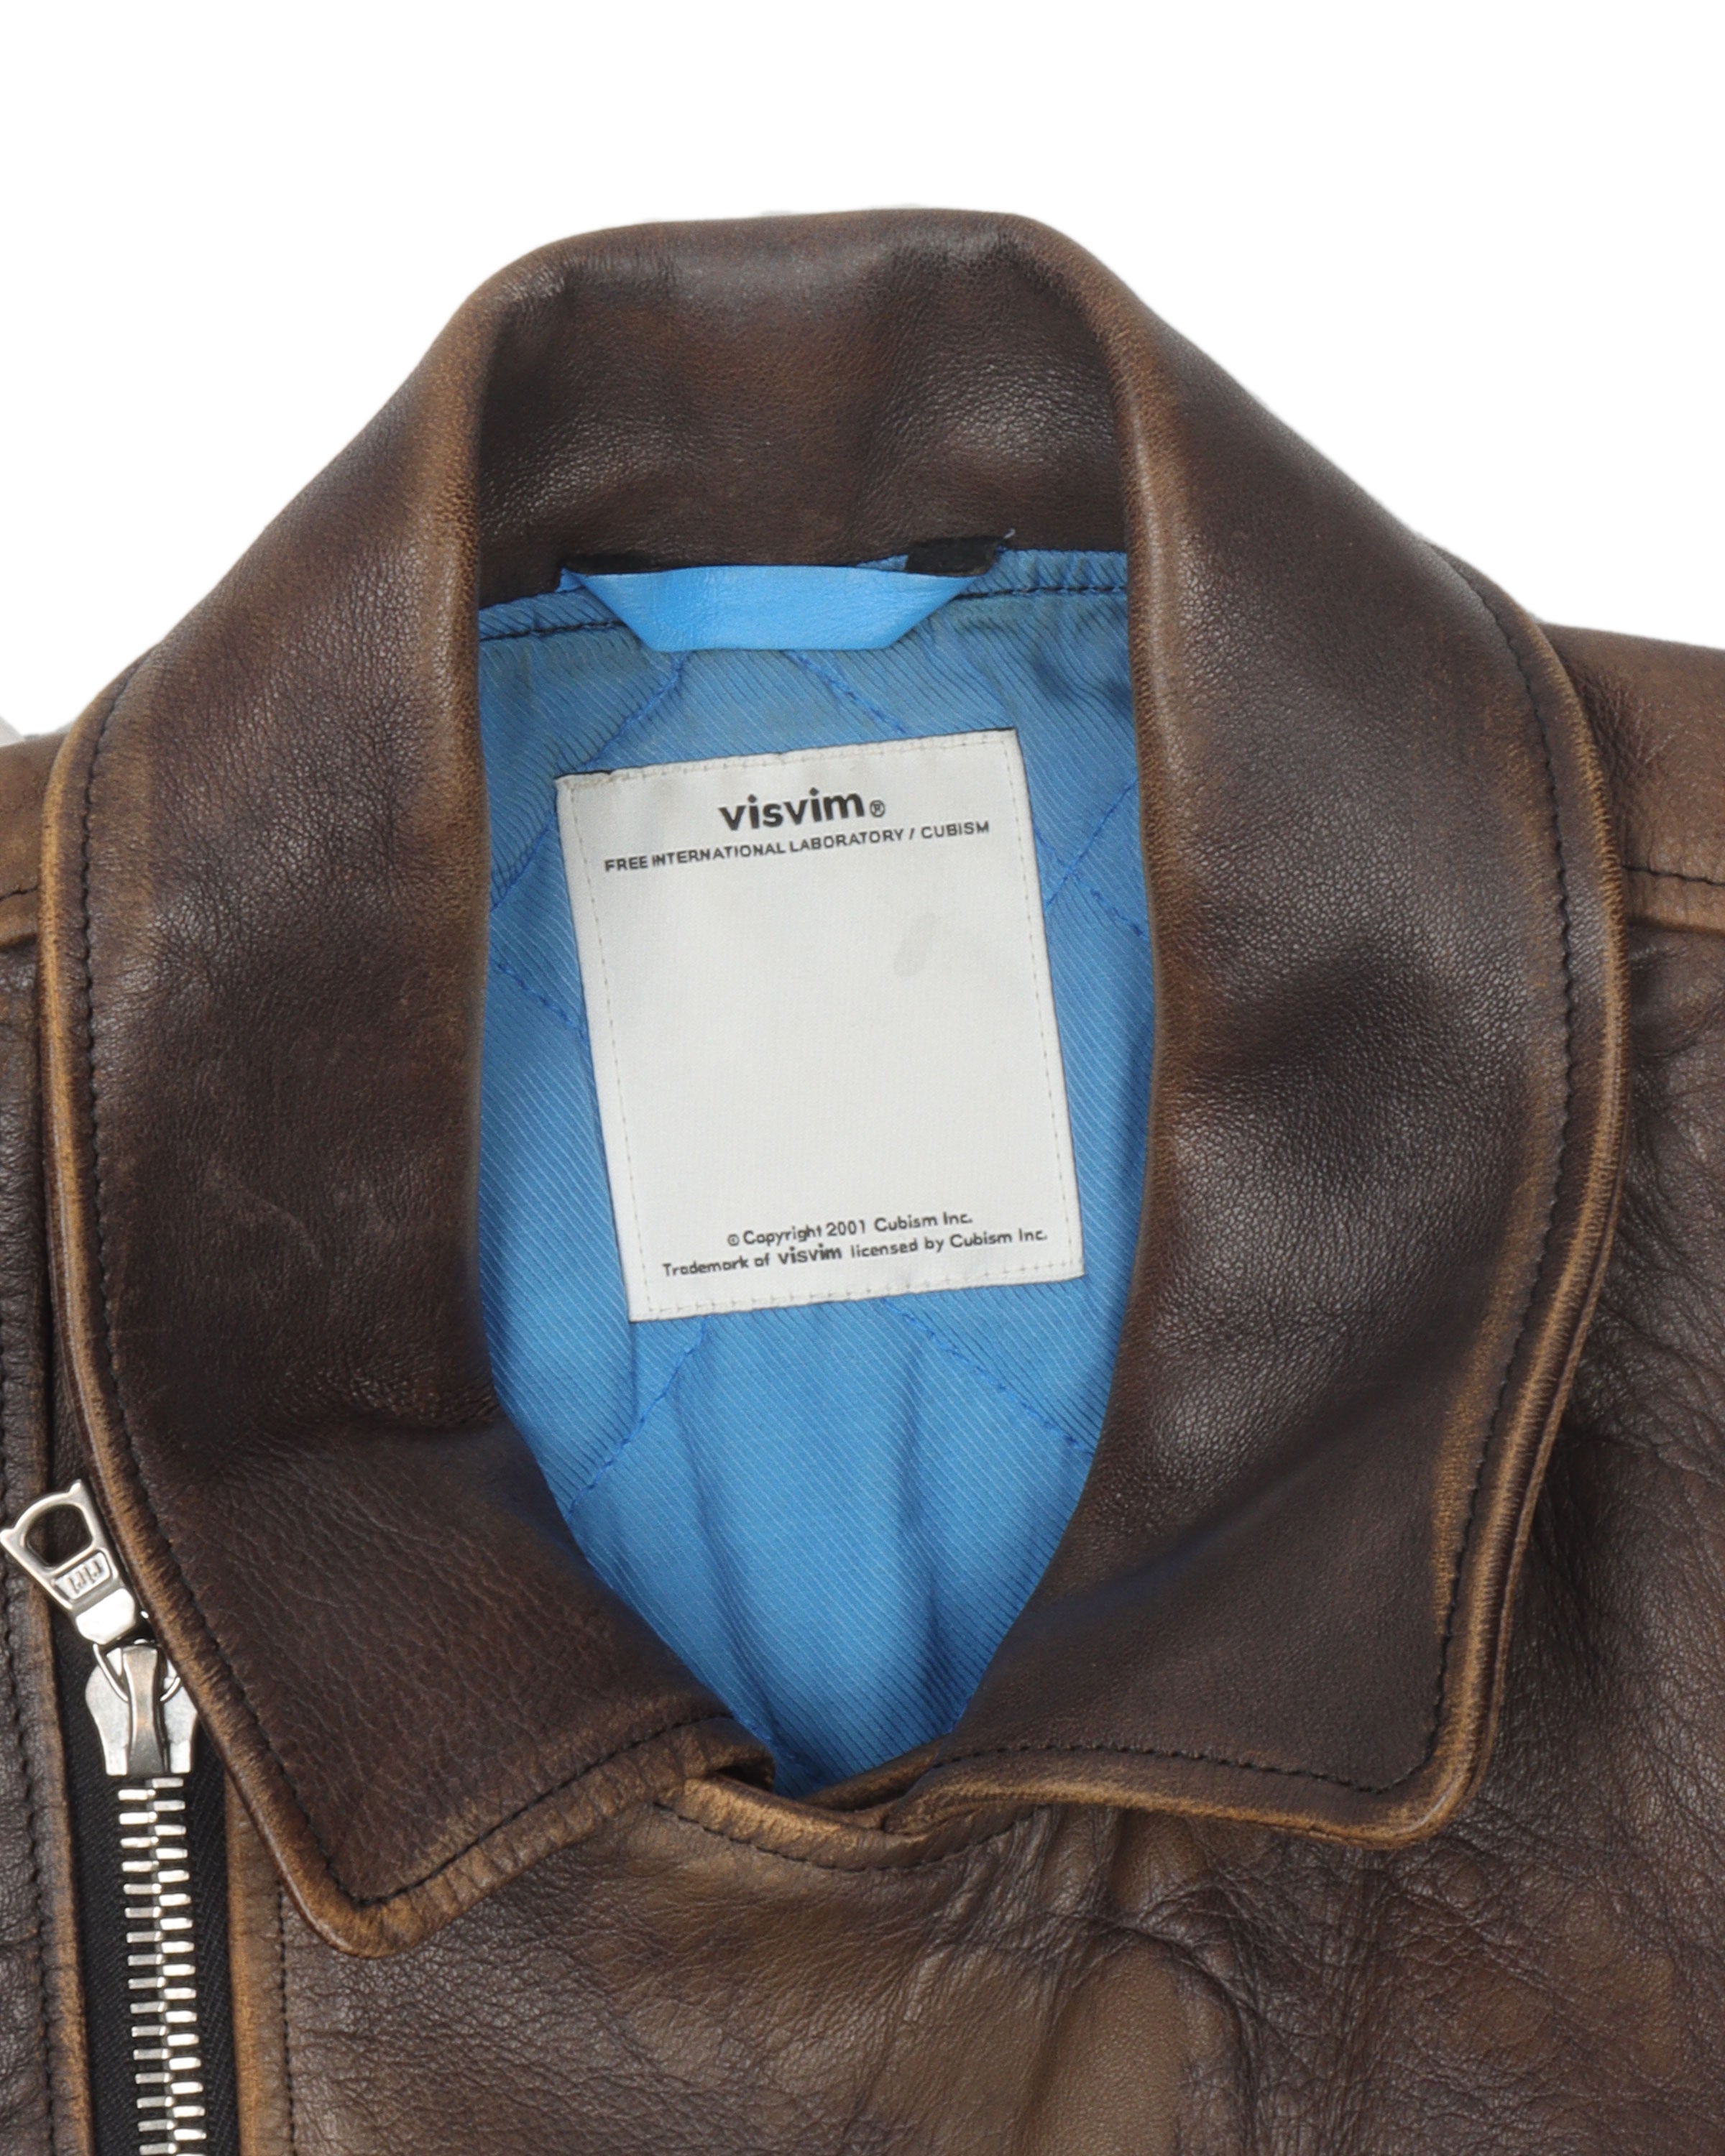 09AW Strabler Antique Moto Brown Leather Jacket